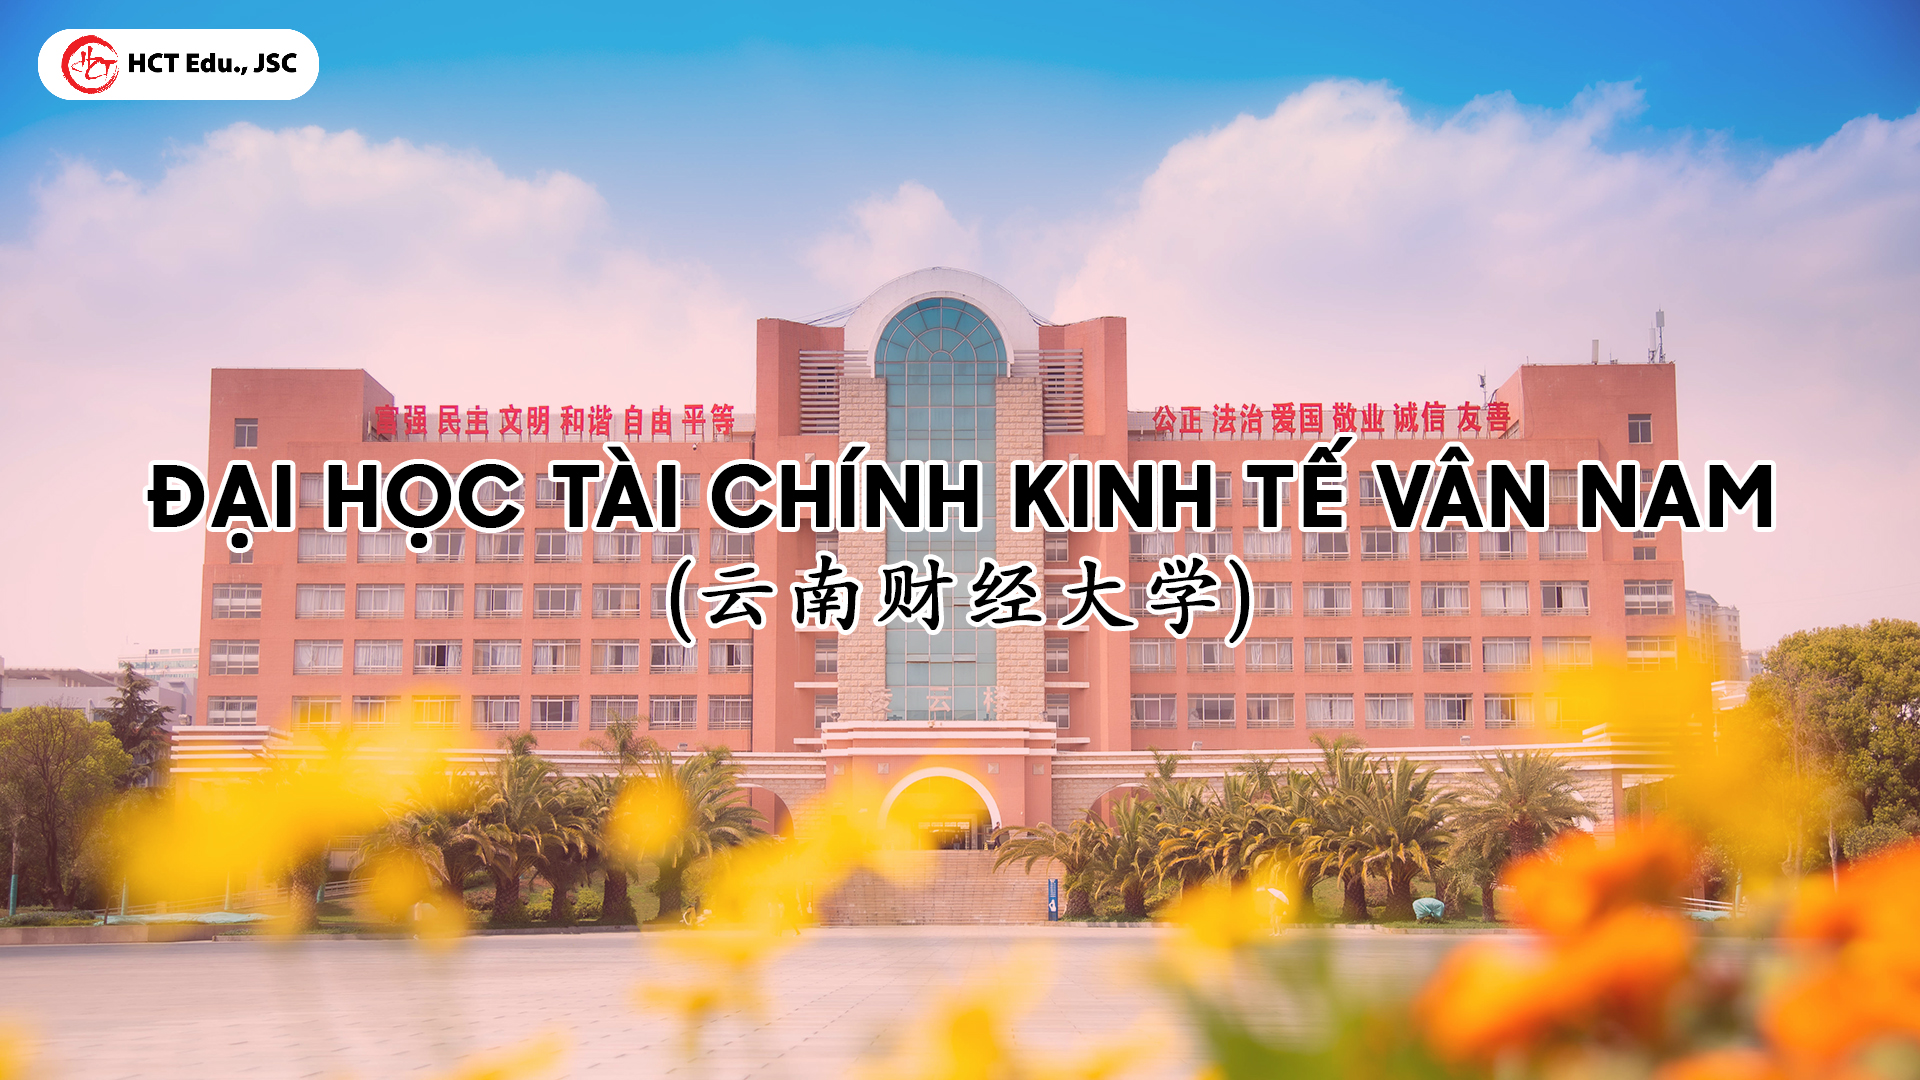 dai hoc tai chinh kinh te van nam yunnan university of finance and economics